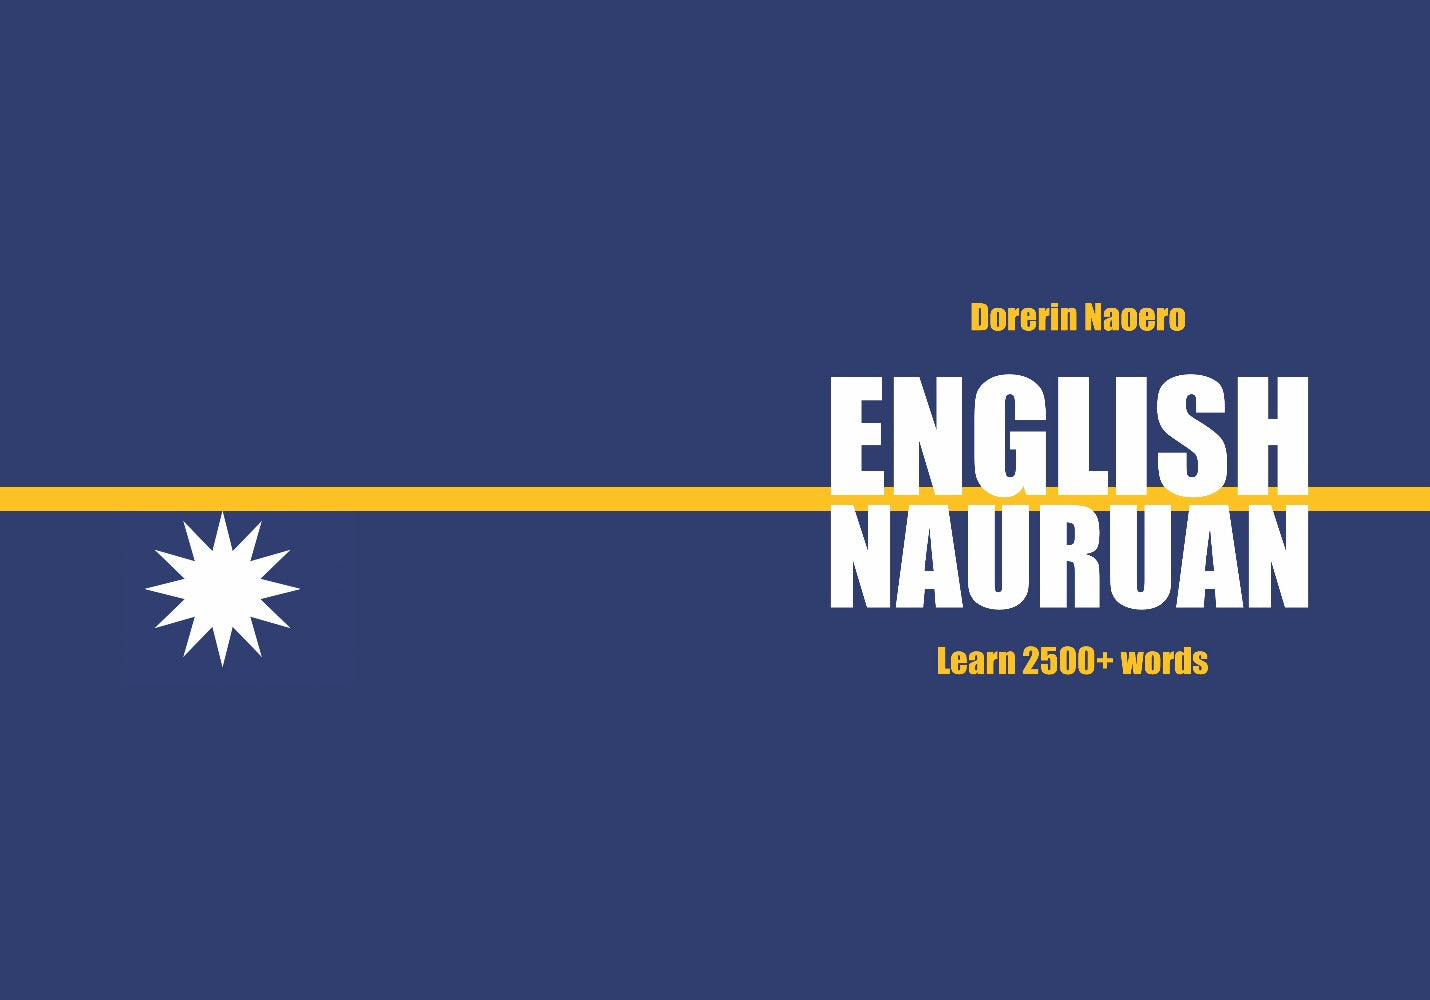 Nauruan language learning notebook cover